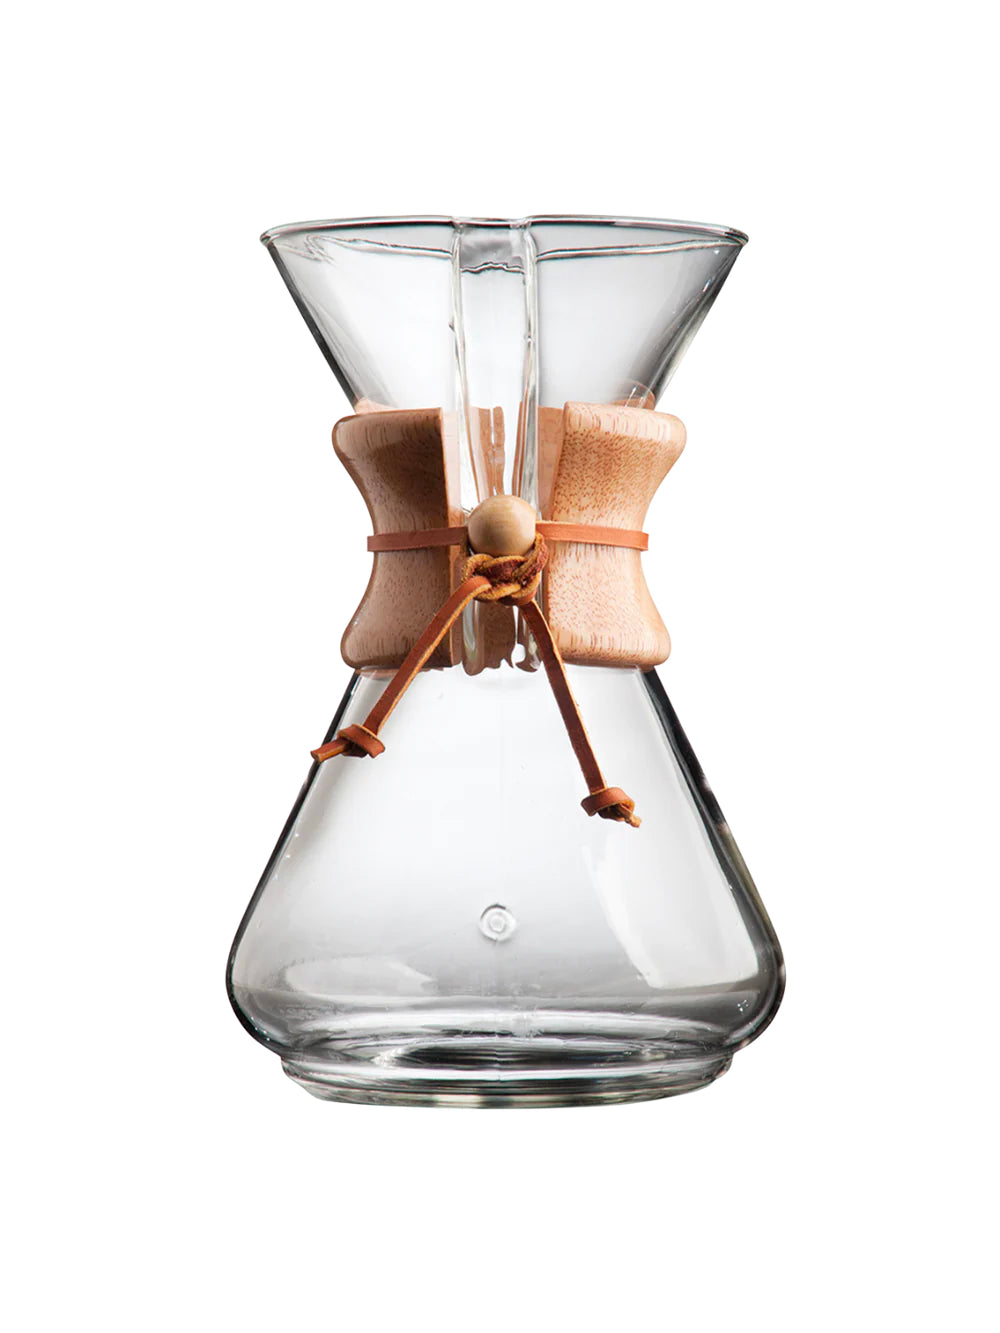 Chemex Coffee Maker - Classic ten Cup - You Barista - Chemex Coffee Maker